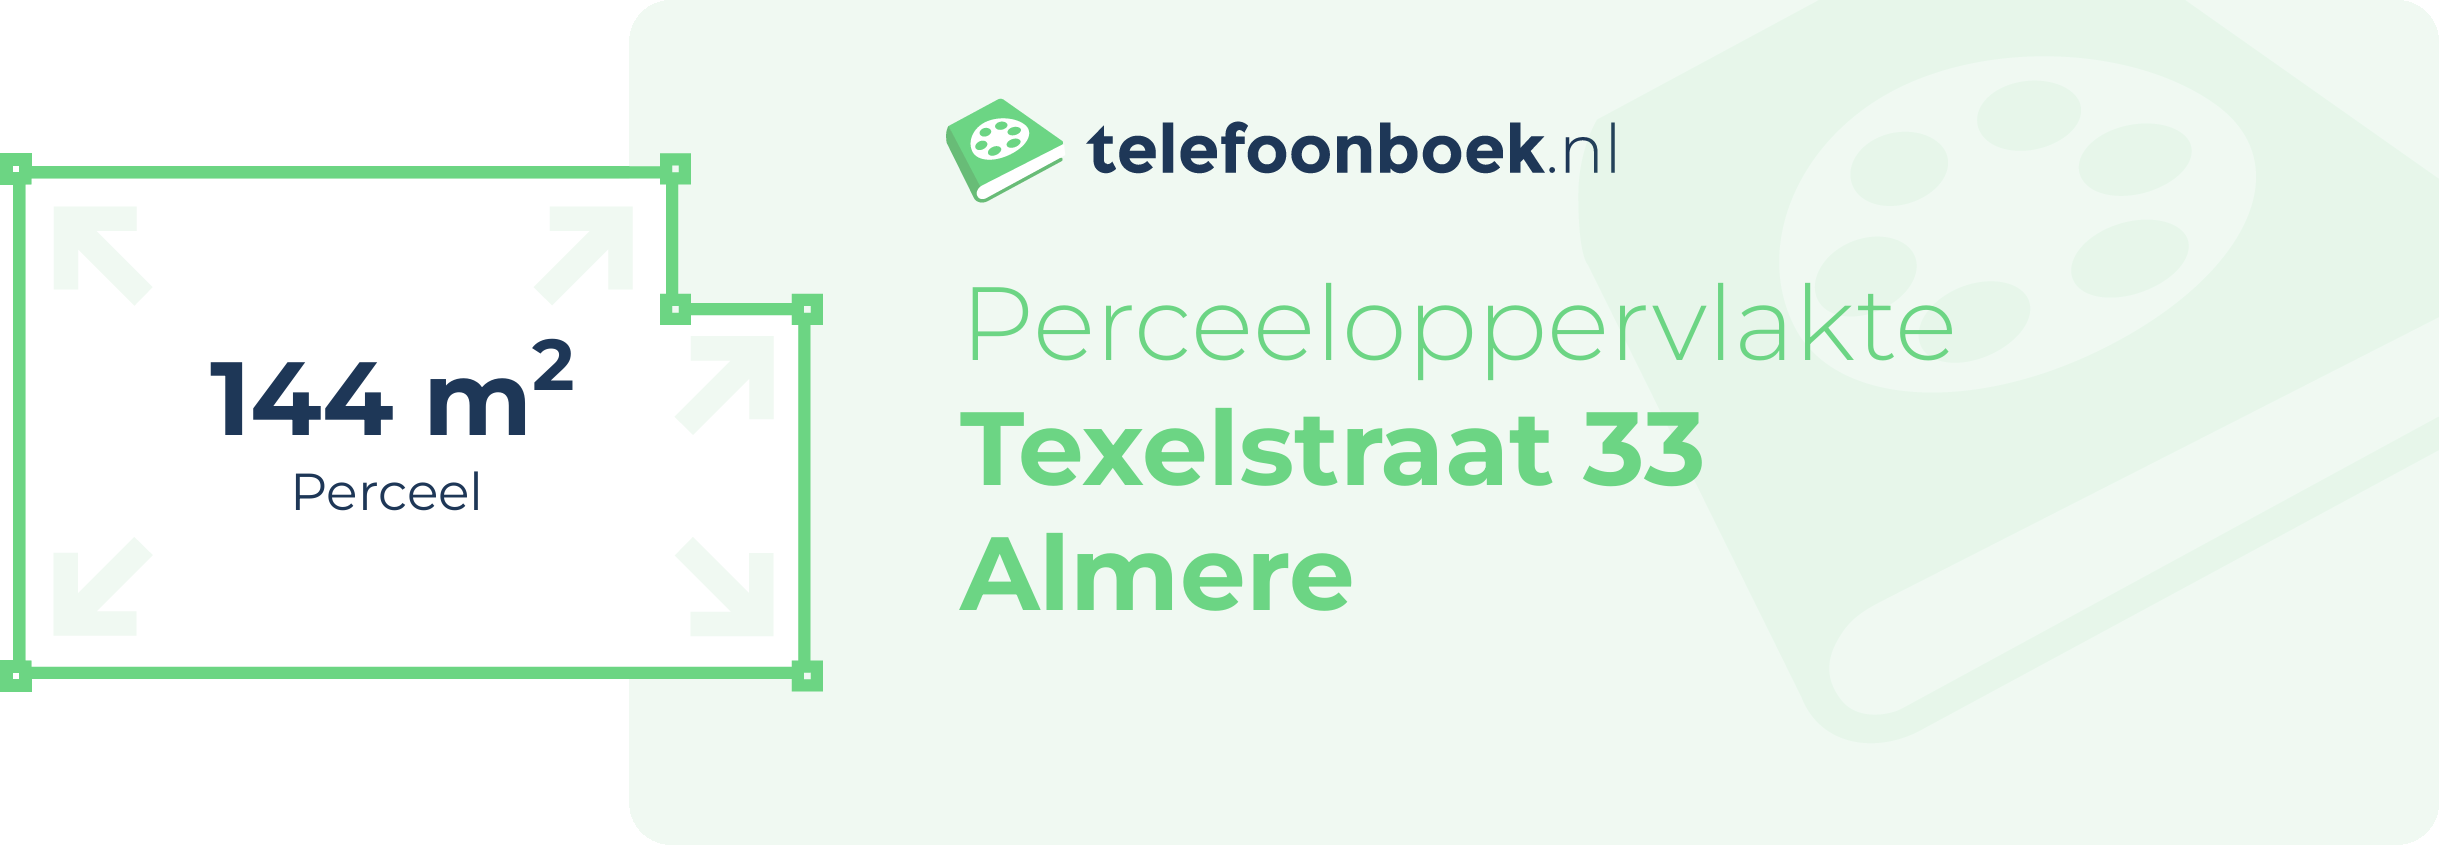 Perceeloppervlakte Texelstraat 33 Almere